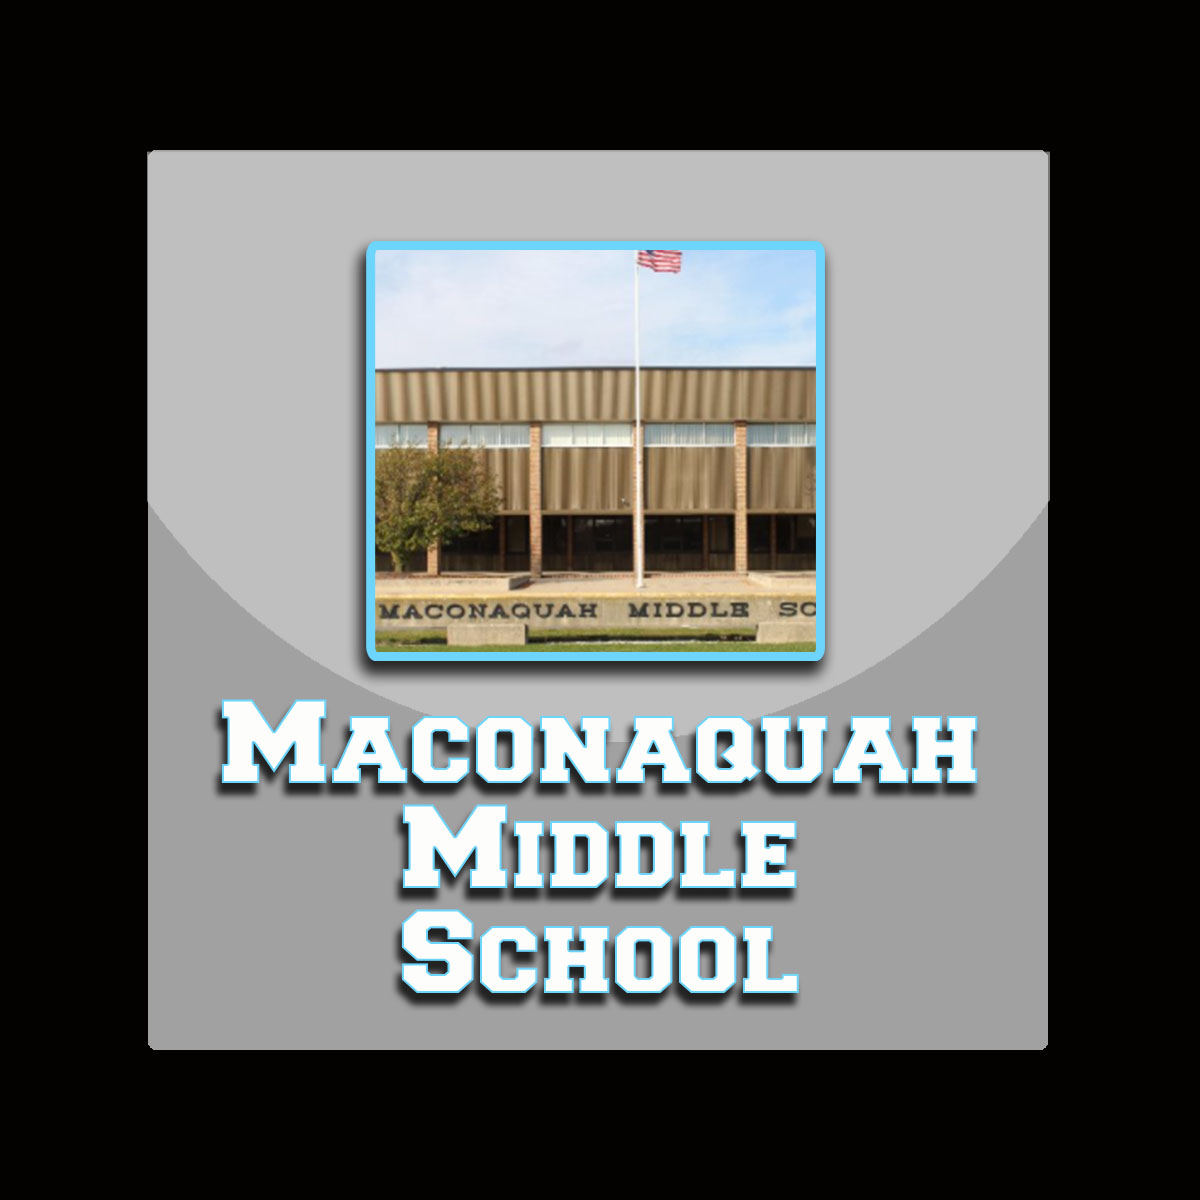 Maconaquah Middle School